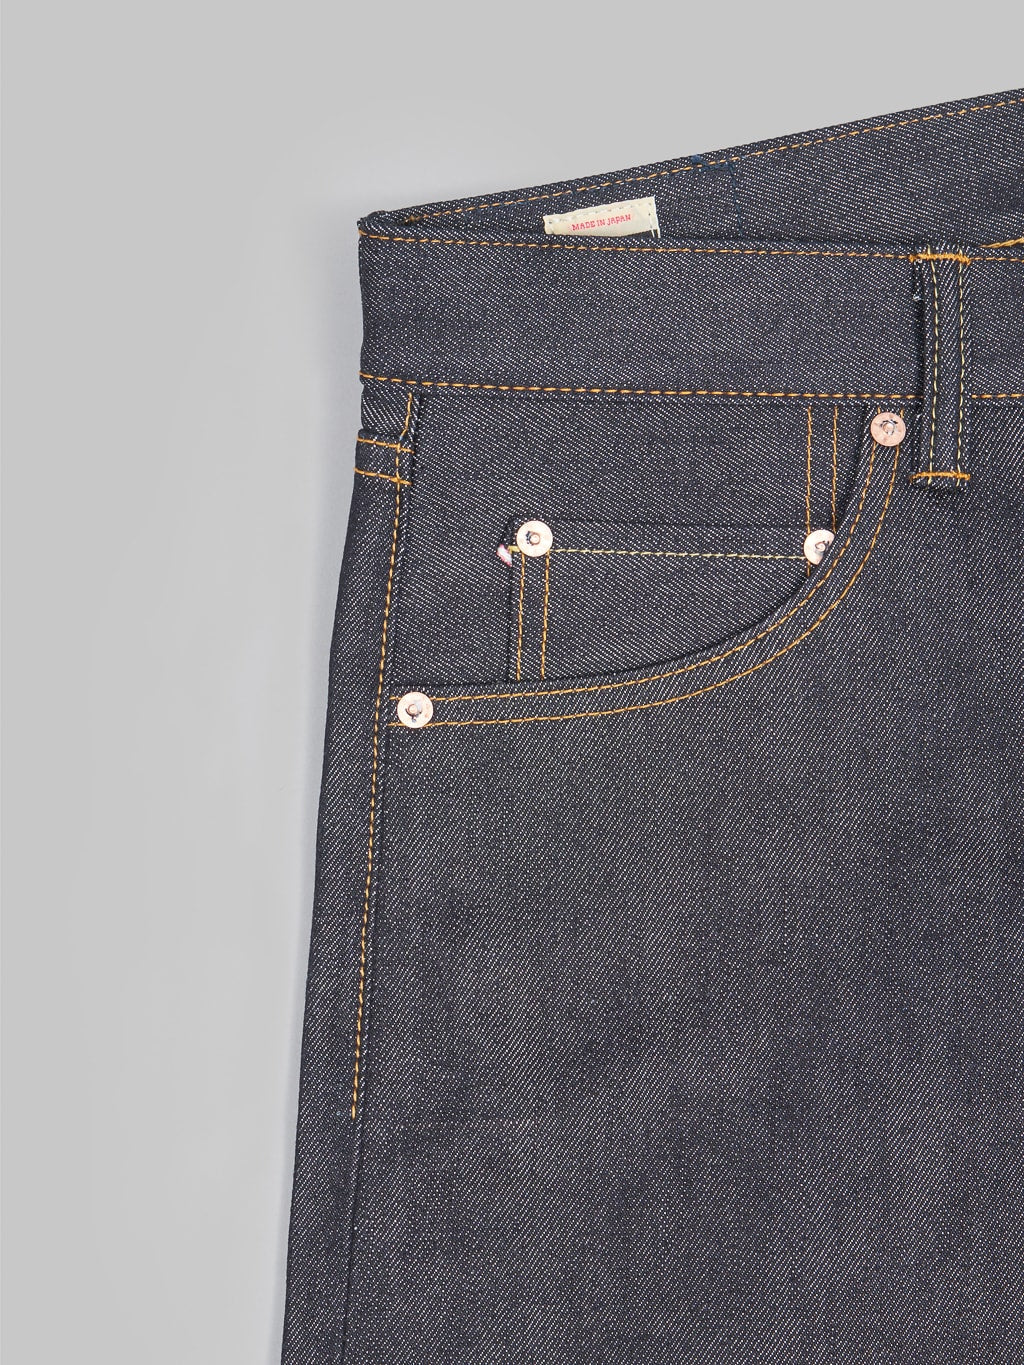 Momotaro 0306SILK 14.5oz Silk Denim Tight Tapered Jeans